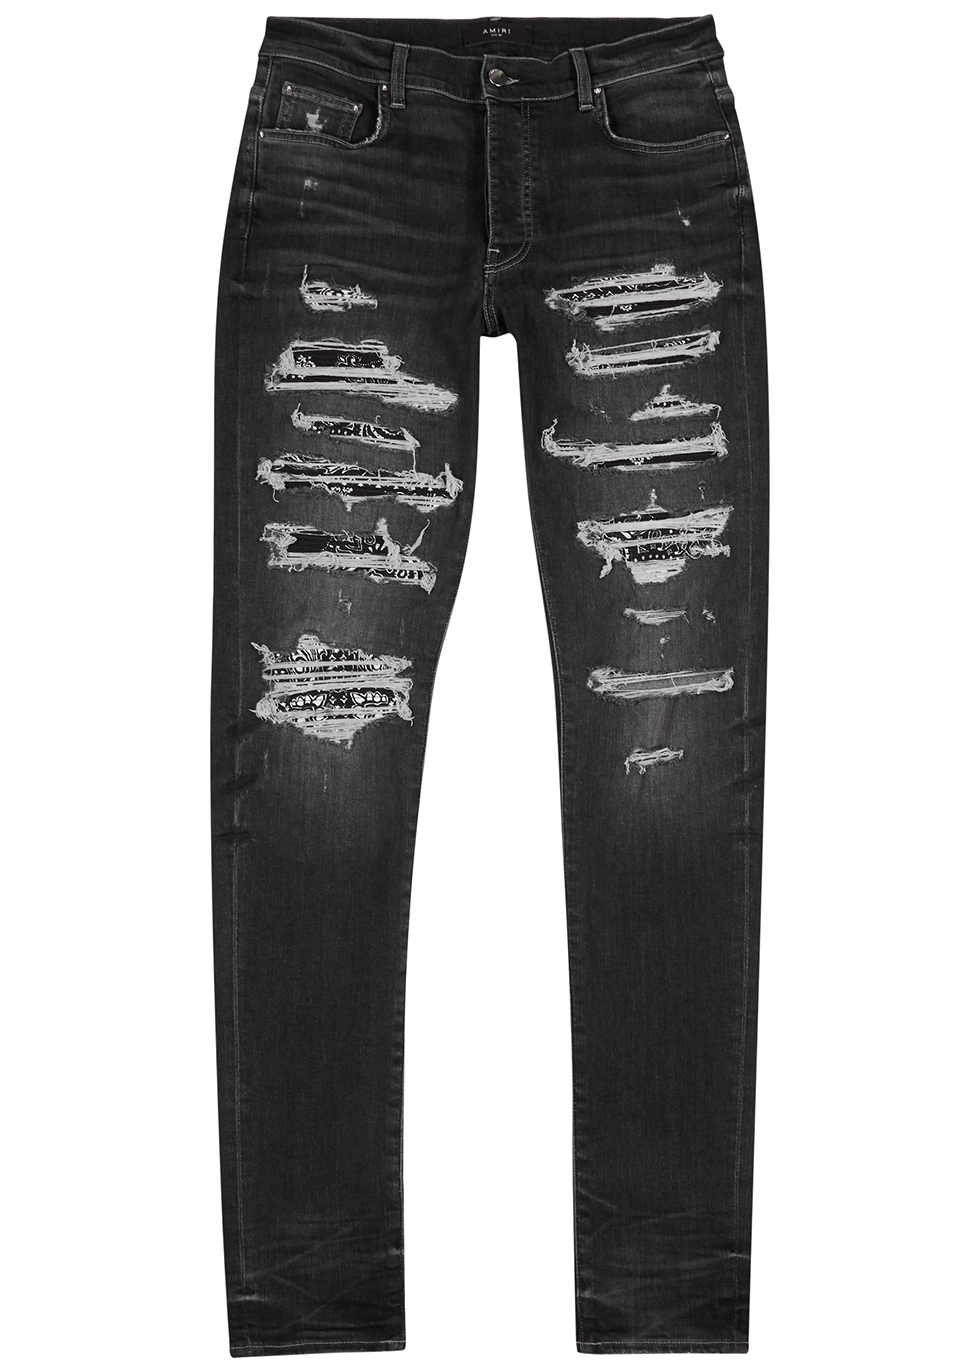 Thrasher grey distressed skinny jeans